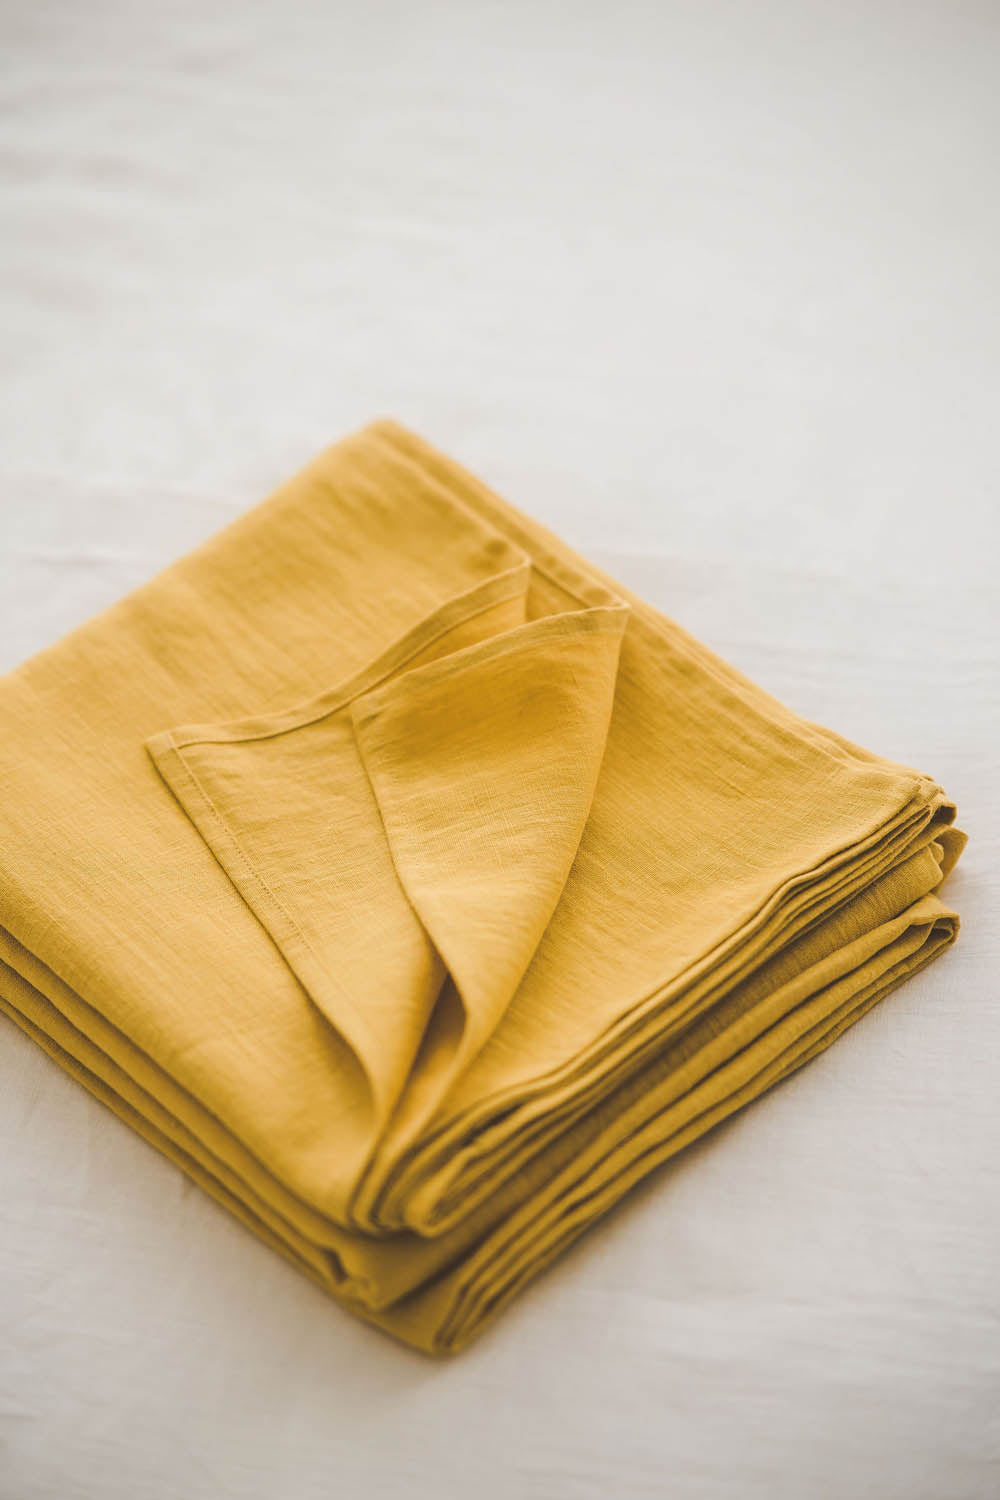 Mimosa yellow linen flat sheet